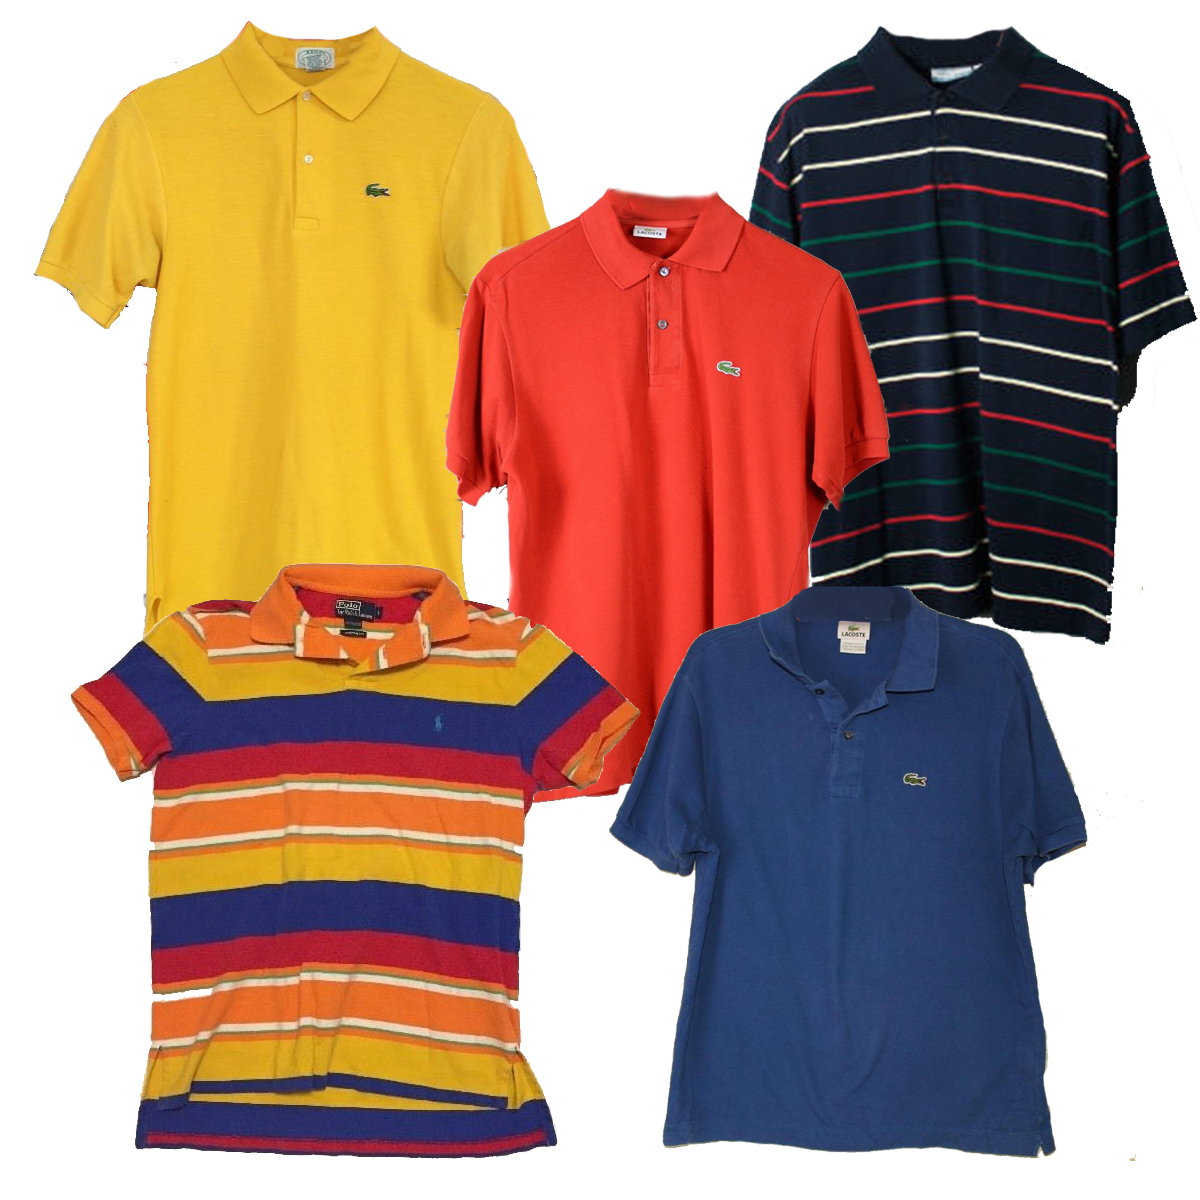 Vintage Polo T-shirts